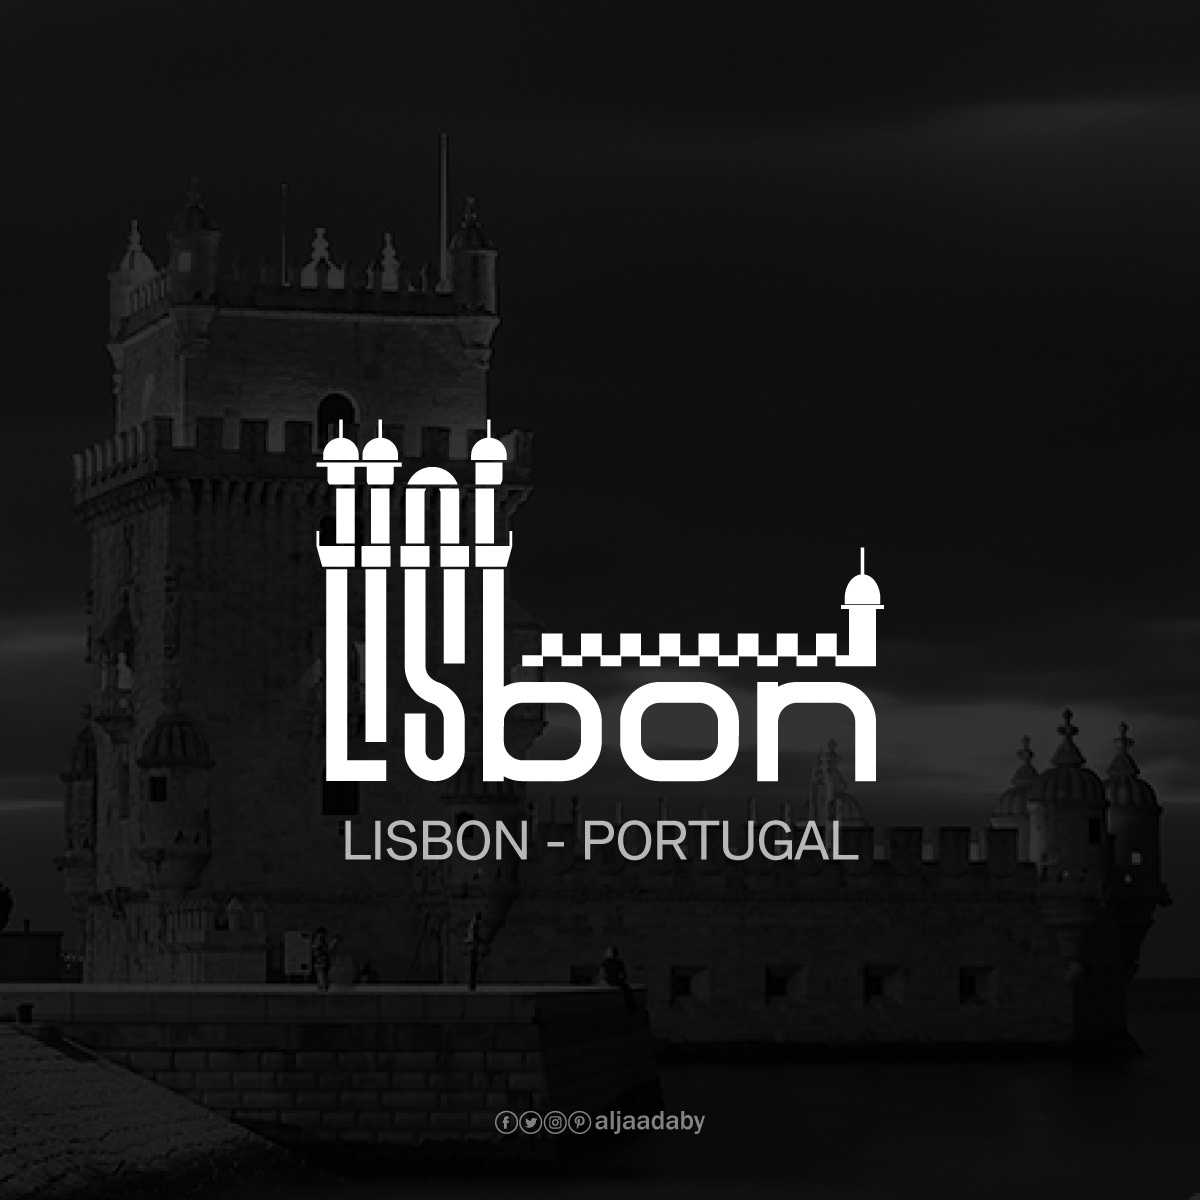 Typographic city logos based on their famous landmarks - Lisbon